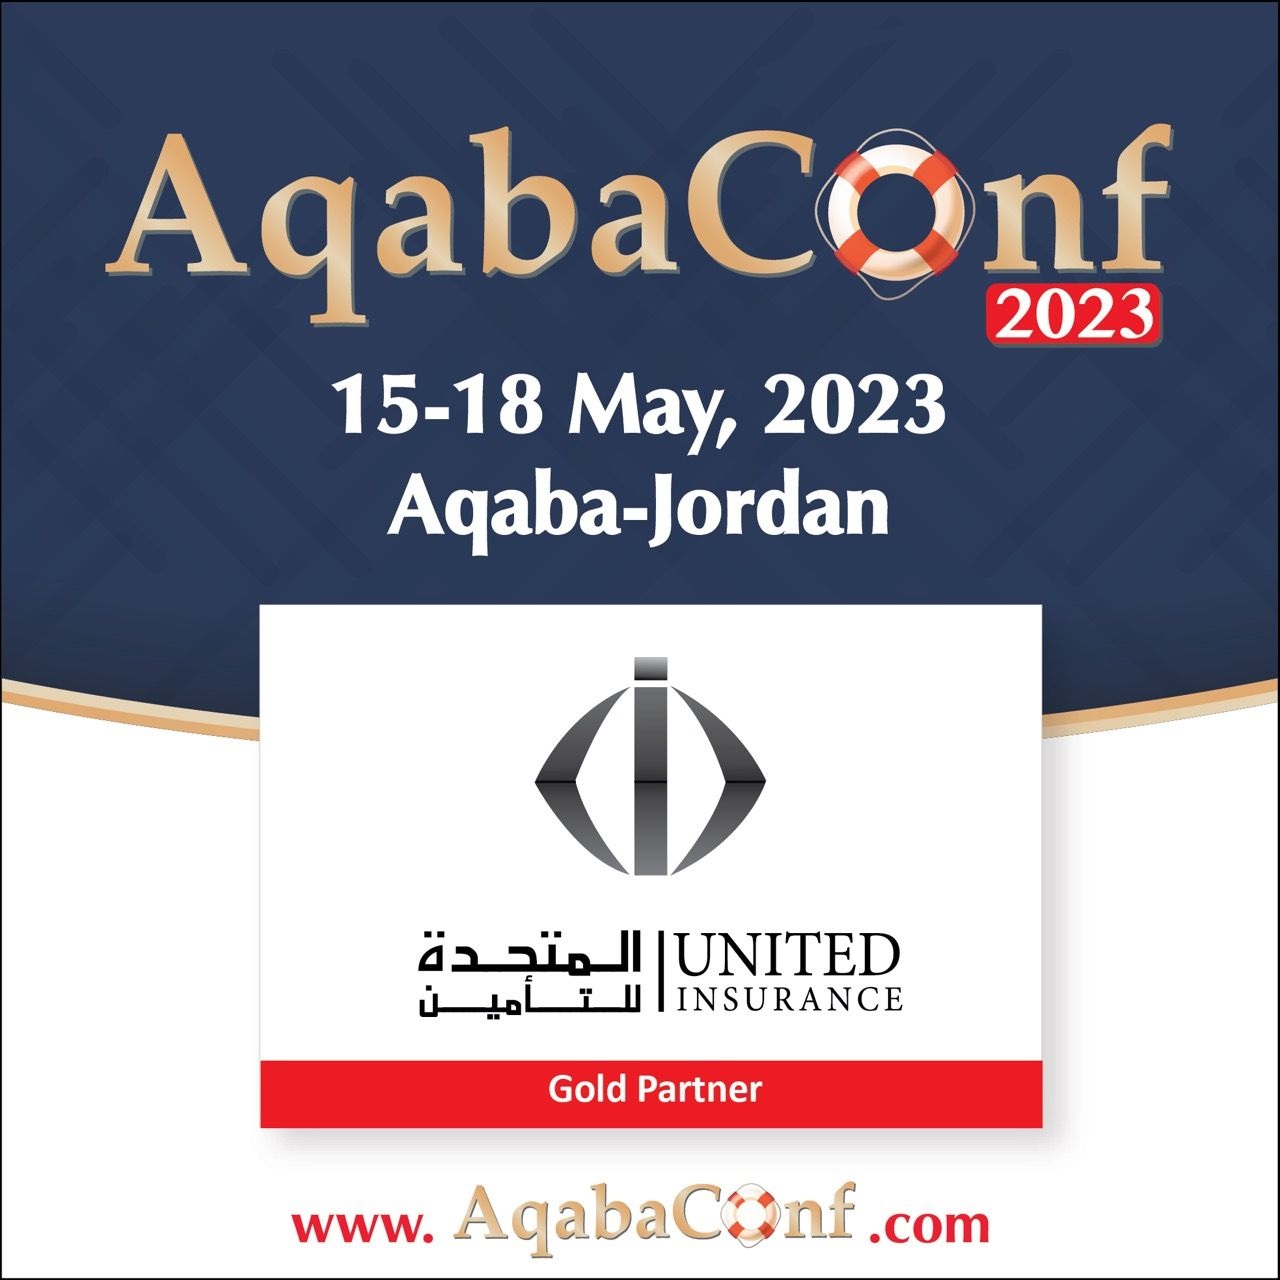 United Insurance company Gold partner at AqabaConf 2023